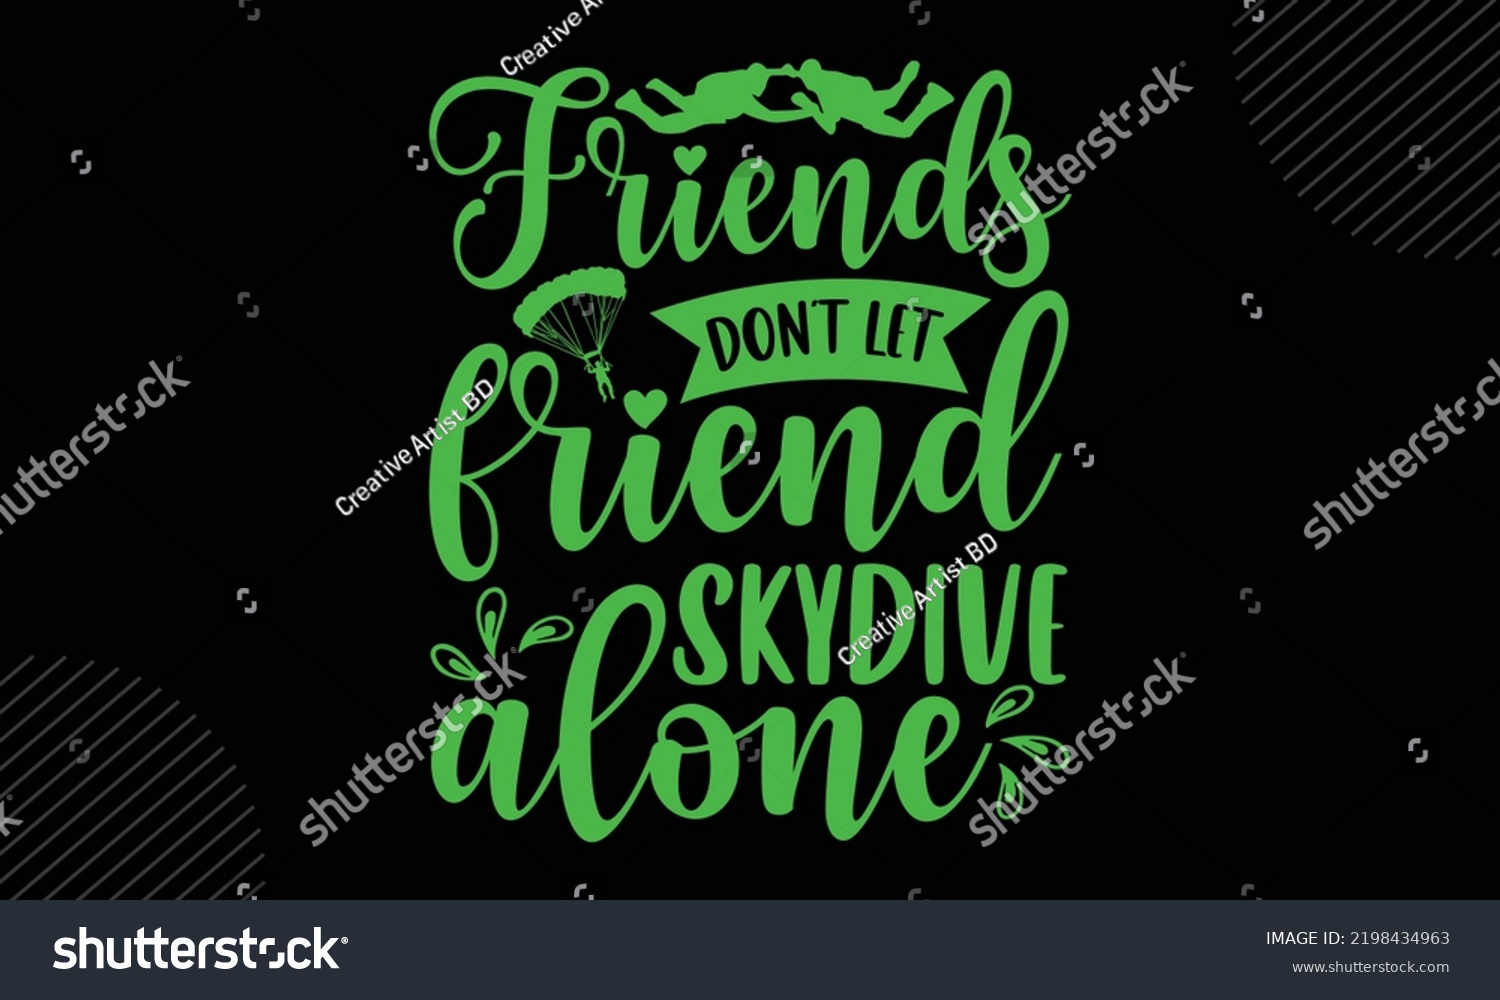 SVG of Friends Don’t Let Friend Skydive Alone - Skydiving T shirt Design, Hand drawn vintage illustration with hand-lettering and decoration elements, Cut Files for Cricut Svg, Digital Download svg